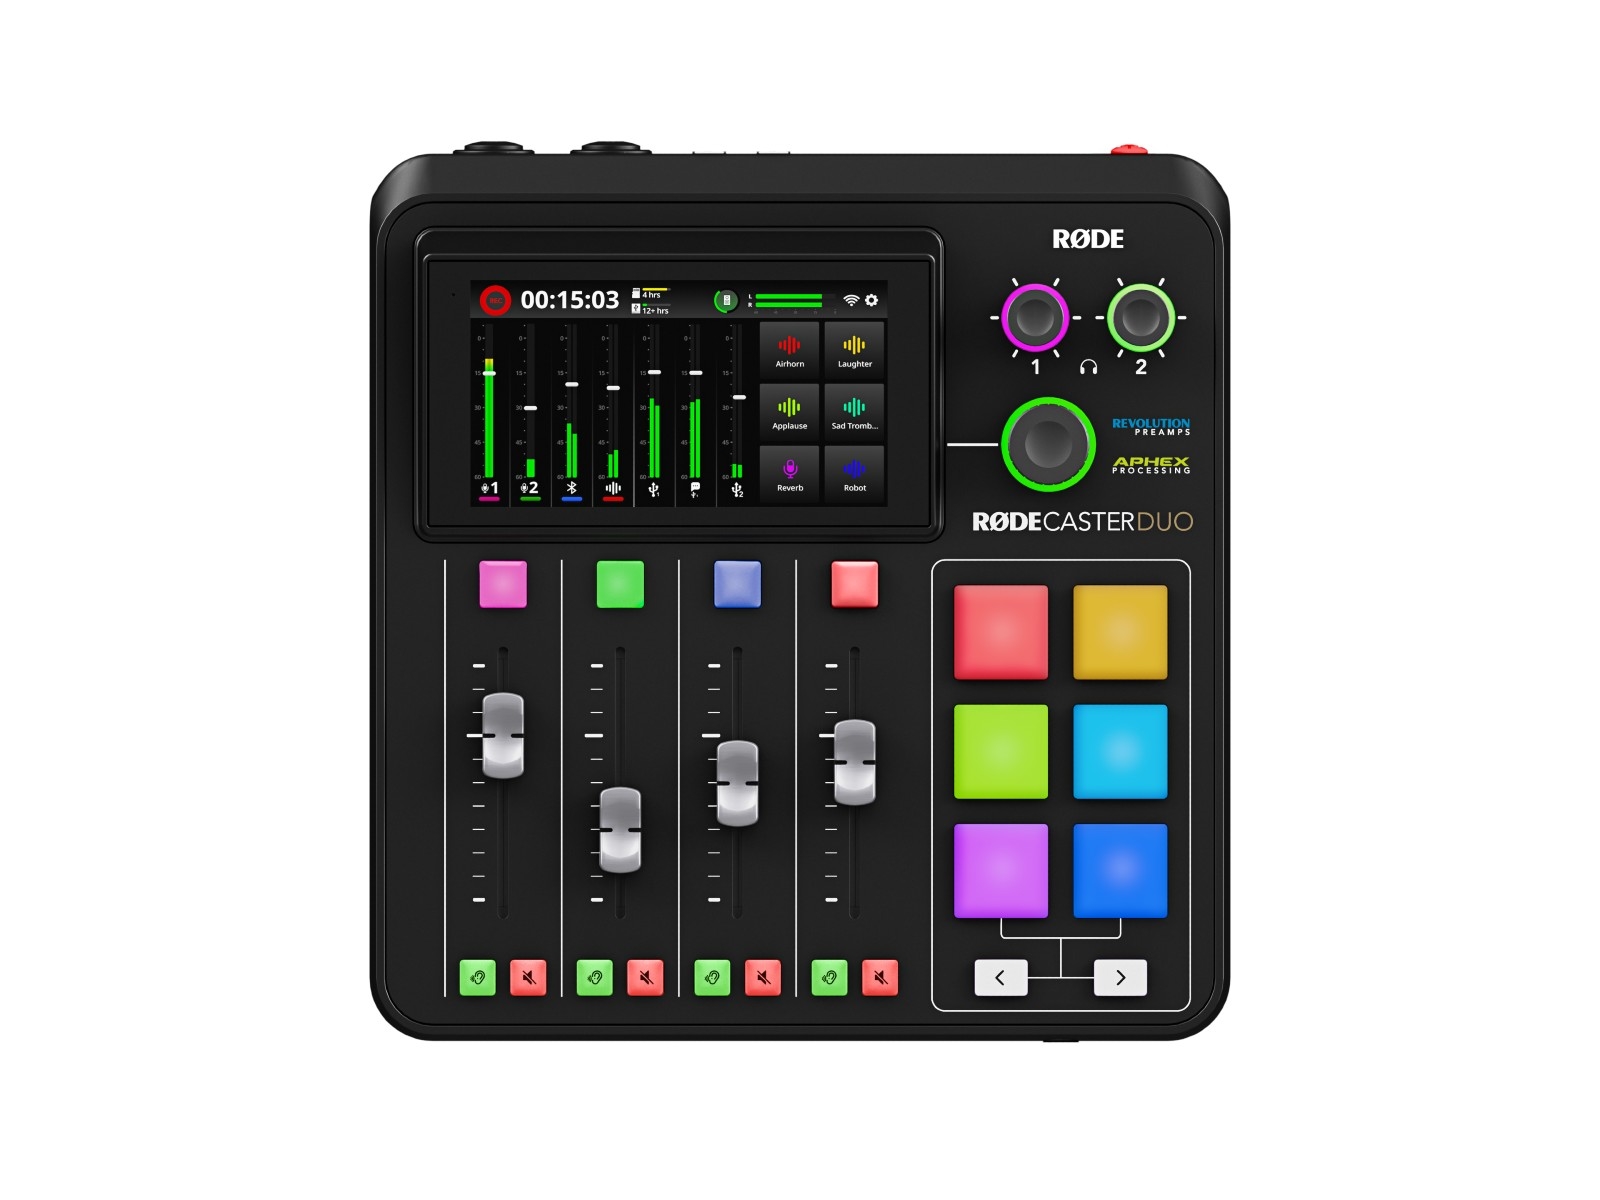 Rode's Streamer X combines an audio interface with an external capture card | DeviceDaily.com